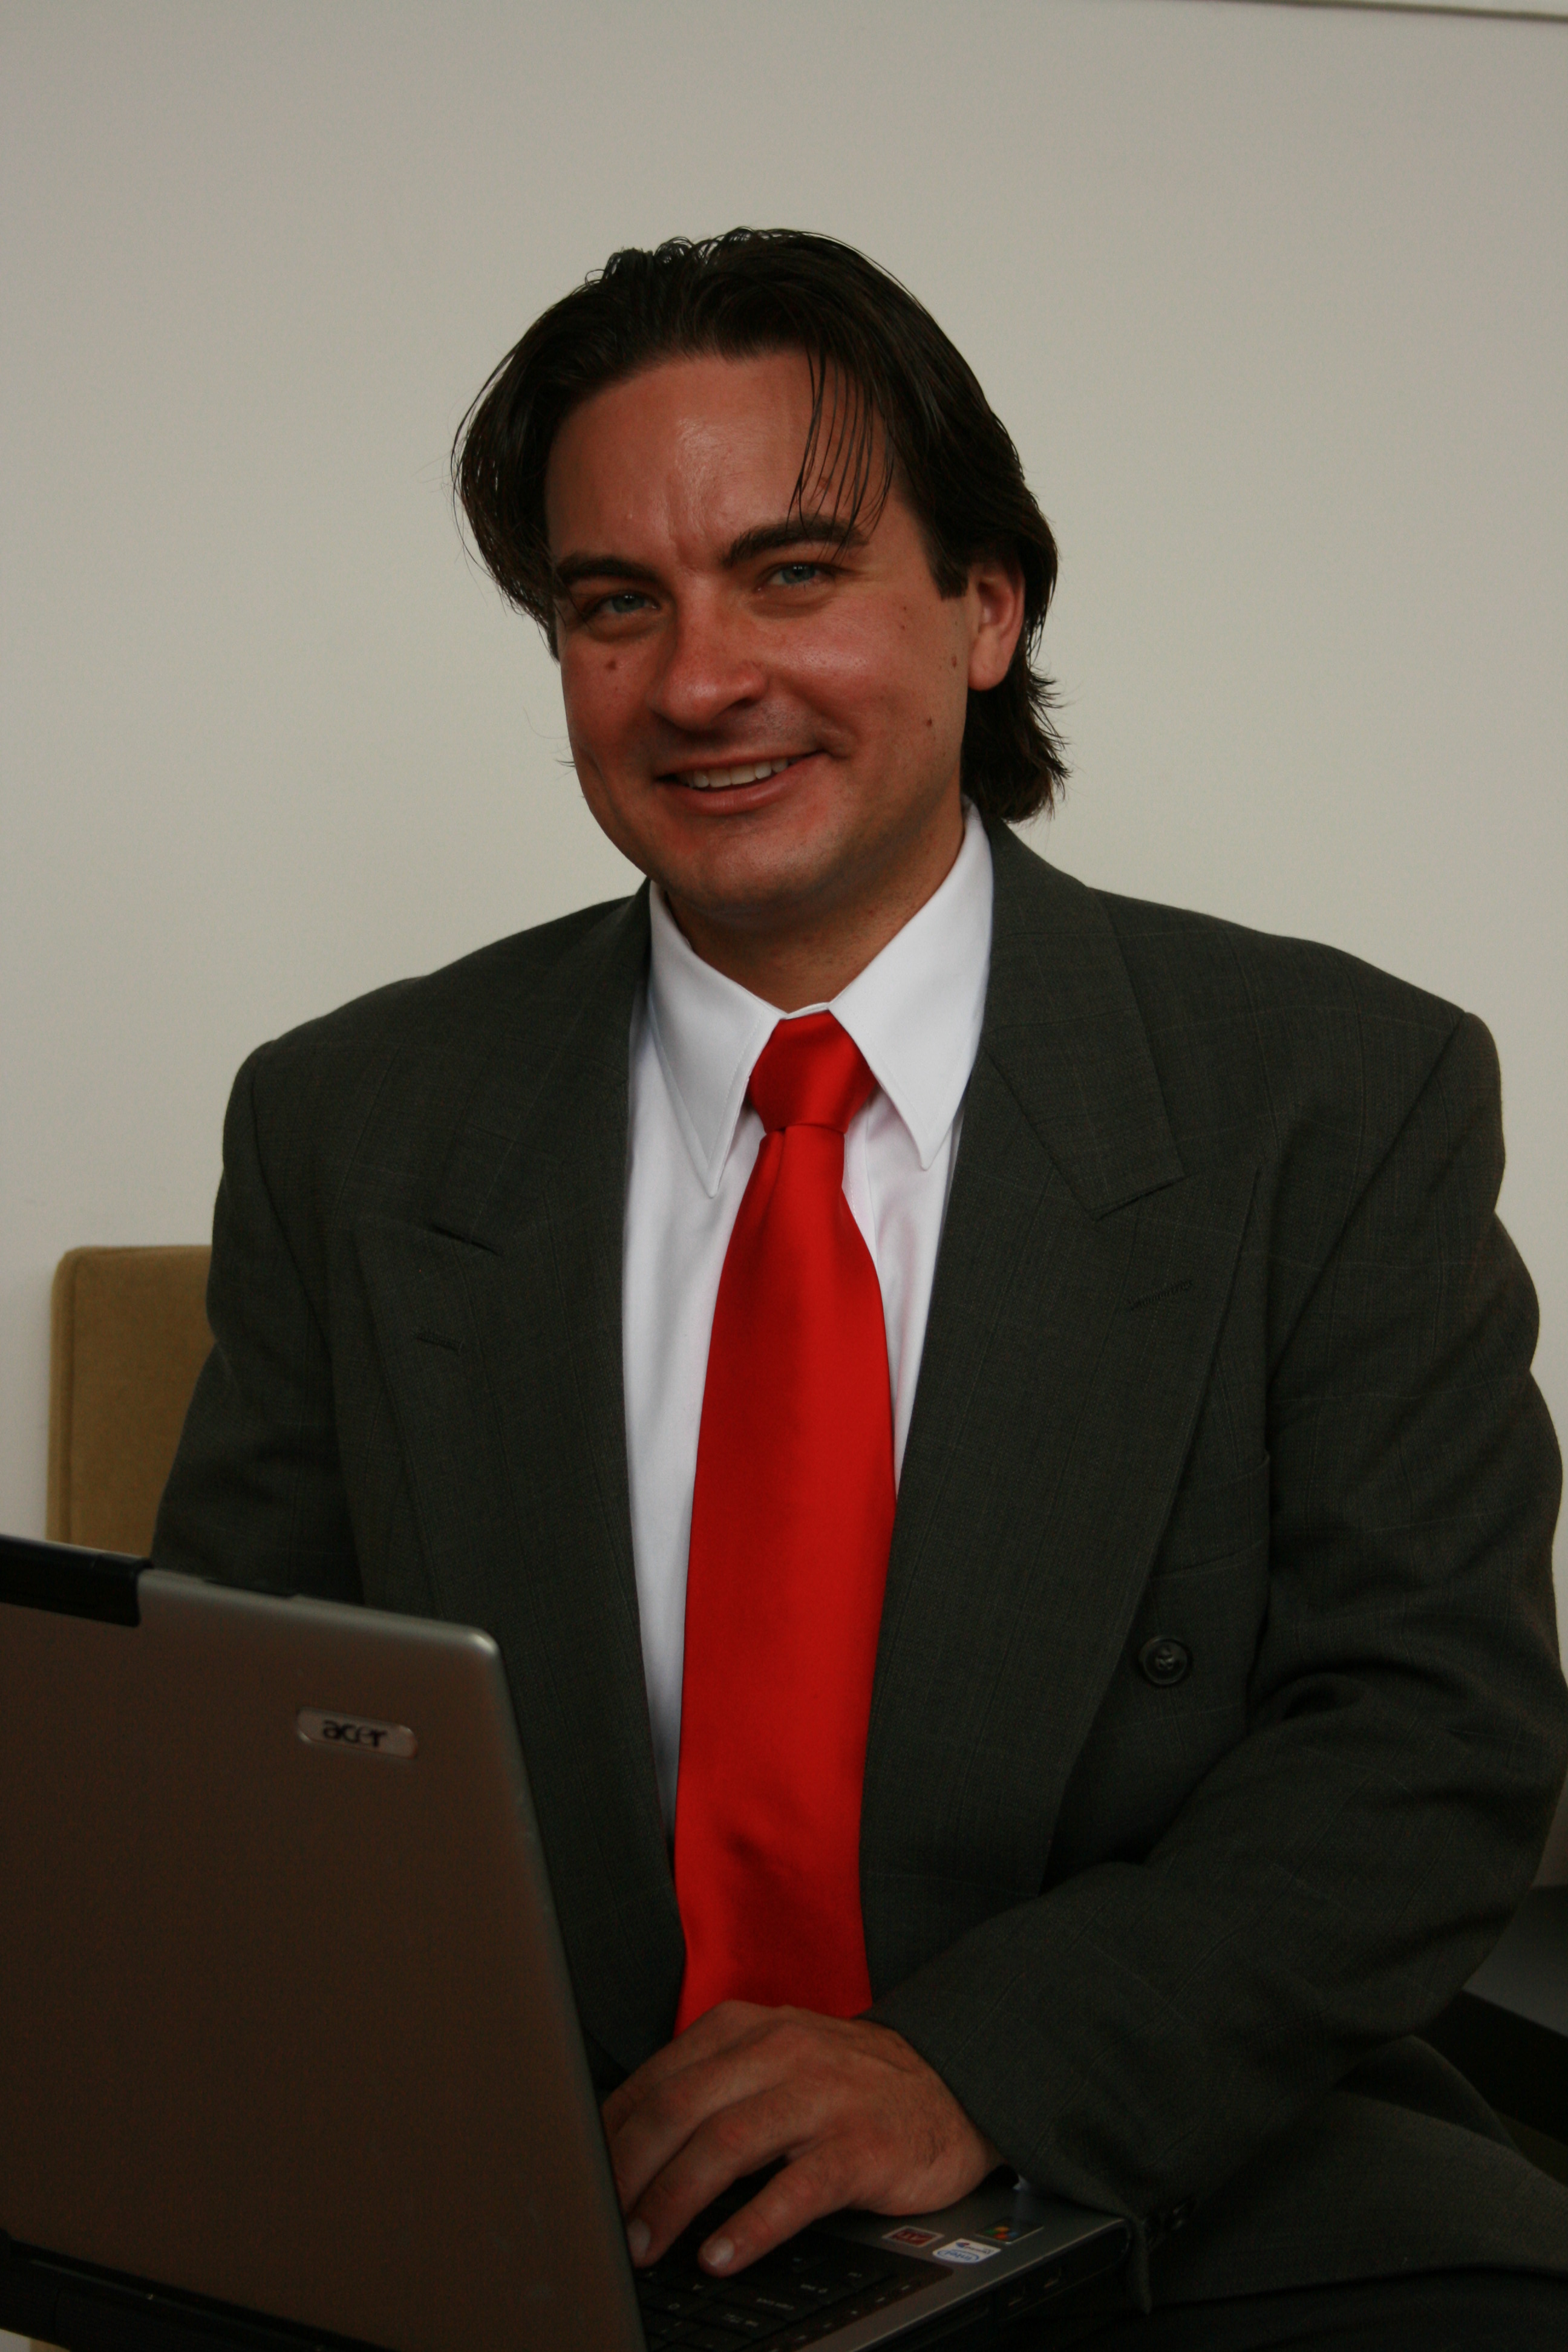 Michael Stoskus